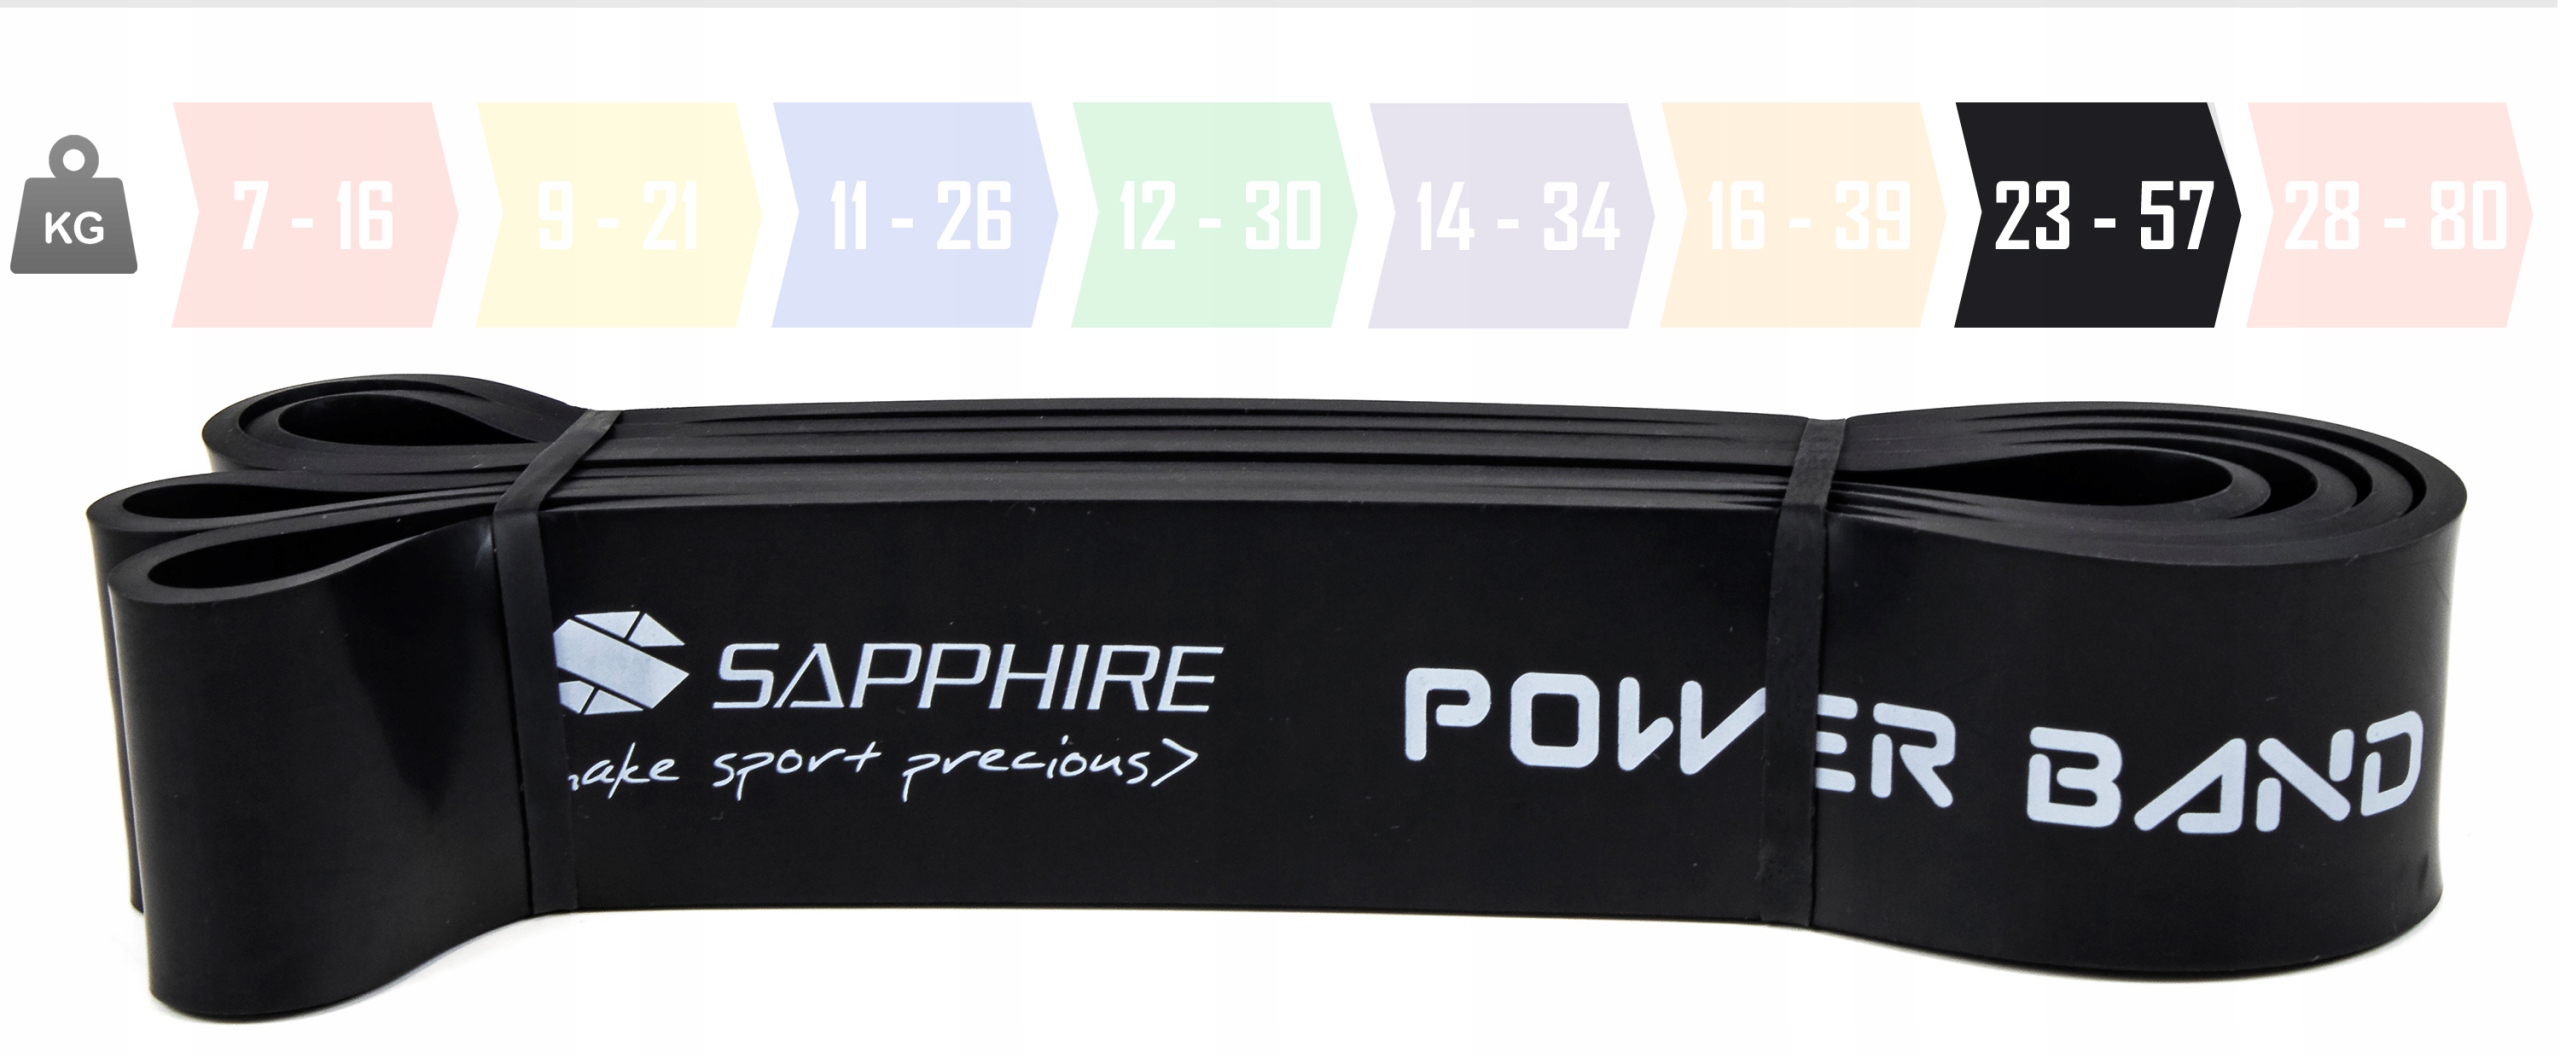 Zestaw gum Sapphire Power Band - 4 sztuki, pakiet HARD